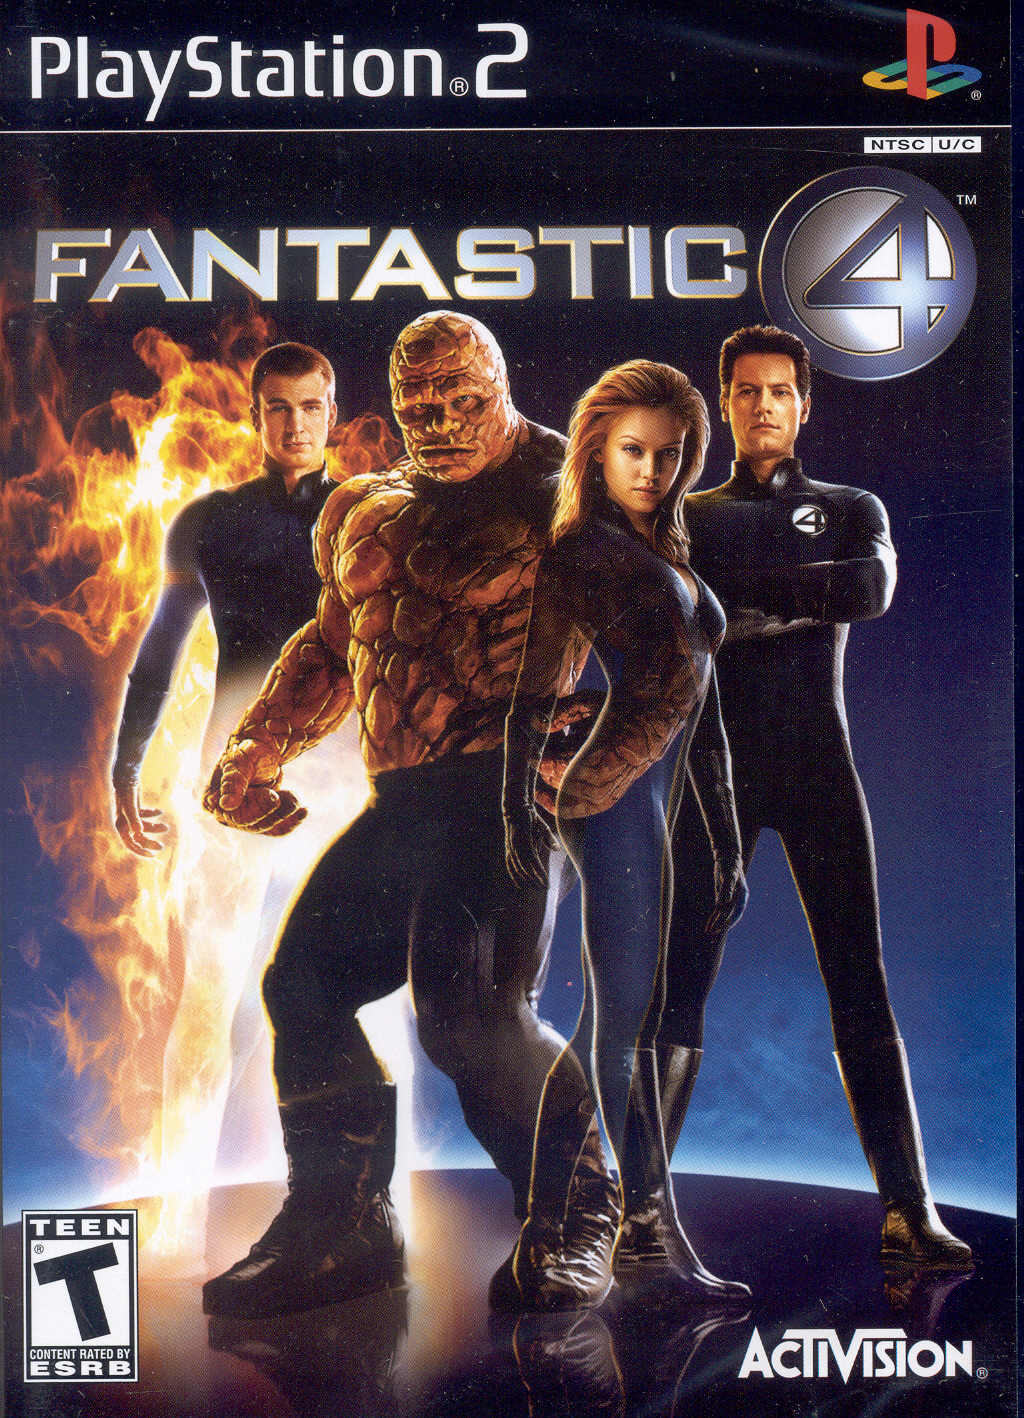 Fantastic Four Game Online